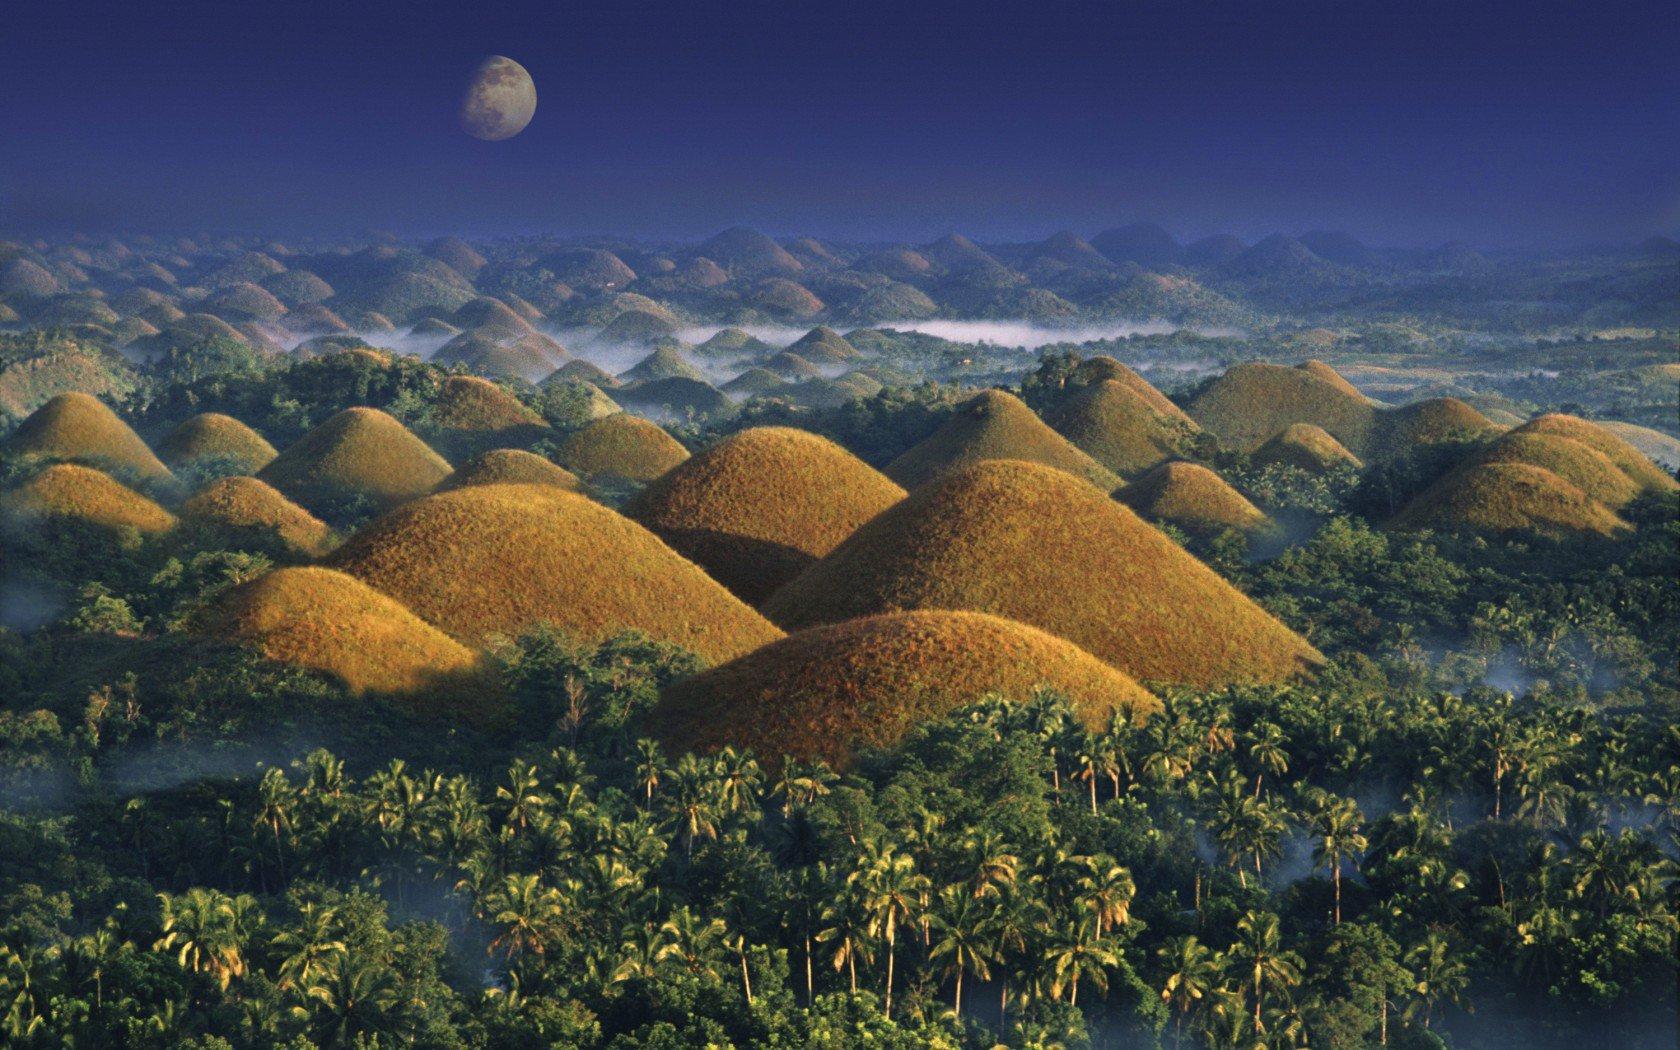 19. Chocolate Hills, Philippines